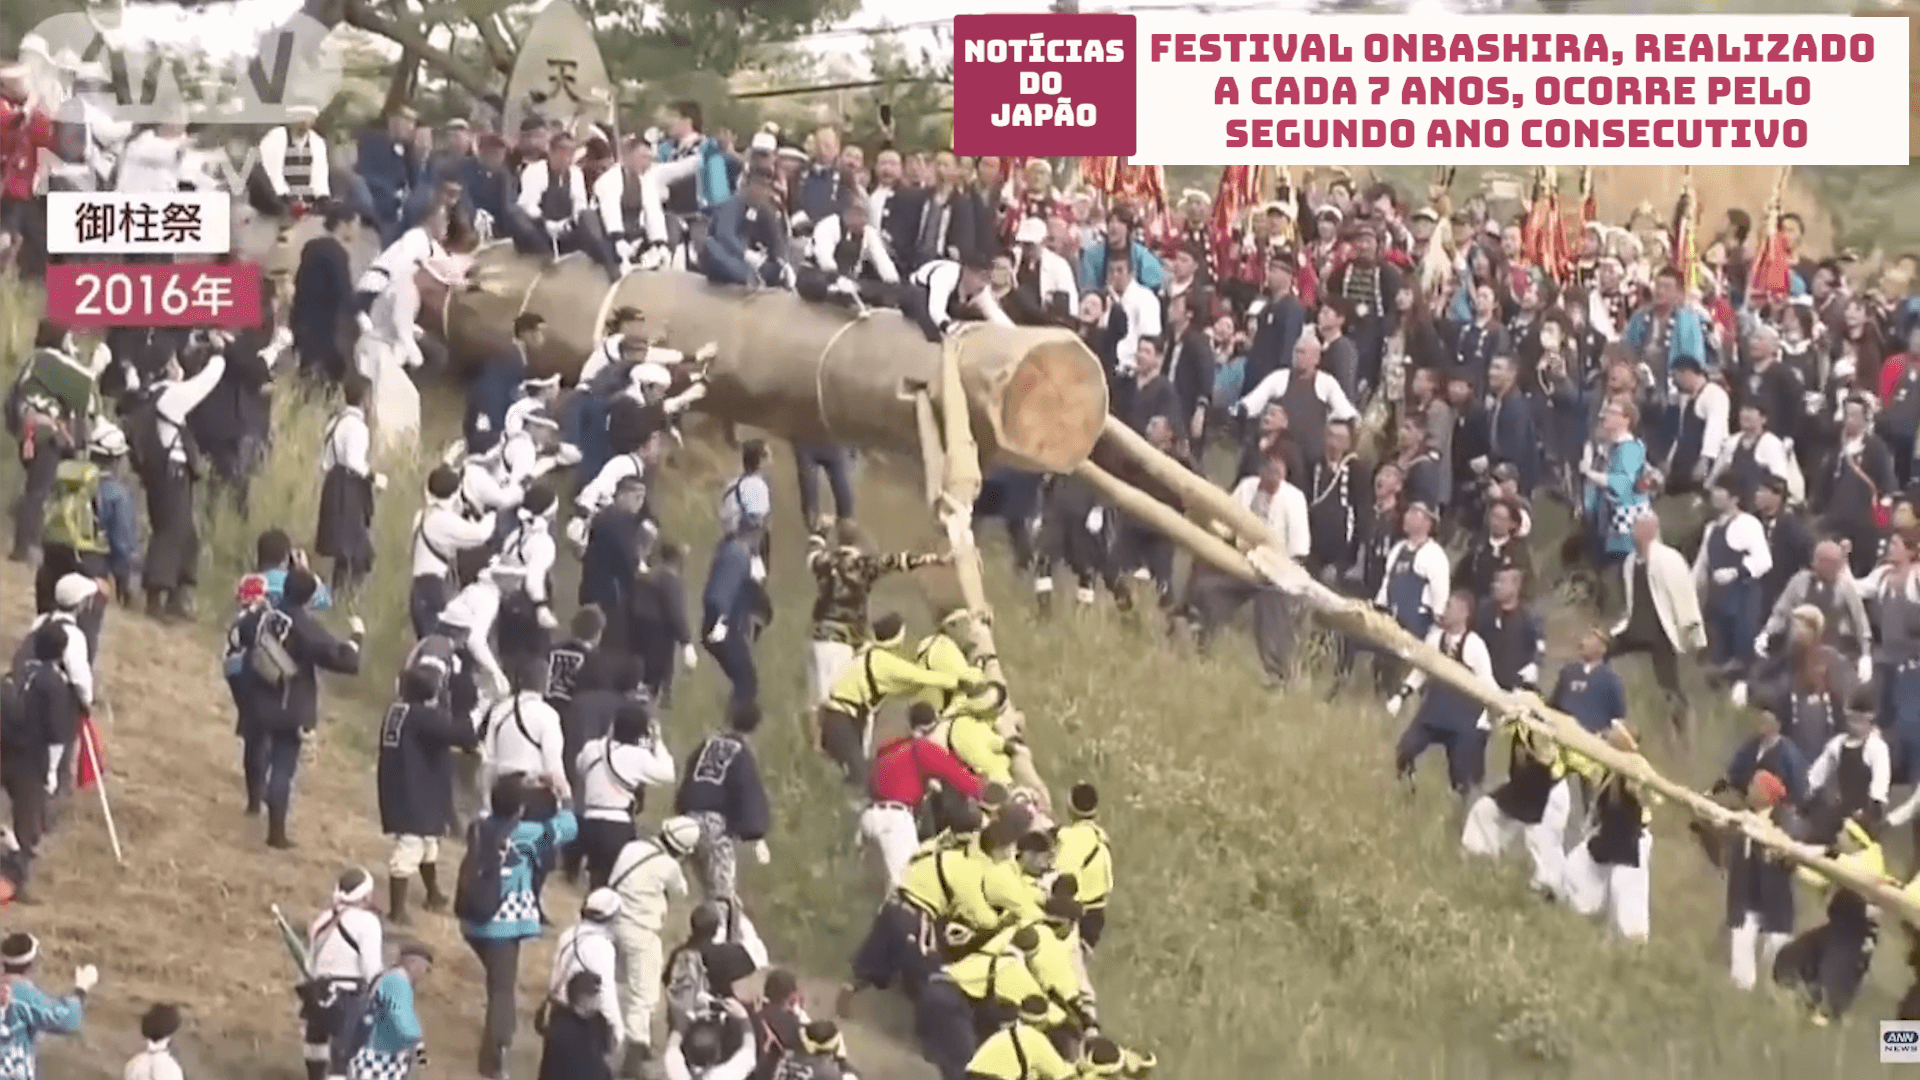 Festival Onbashira, realizado a cada 7 Anos, ocorre pelo segundo ano consecutivo 